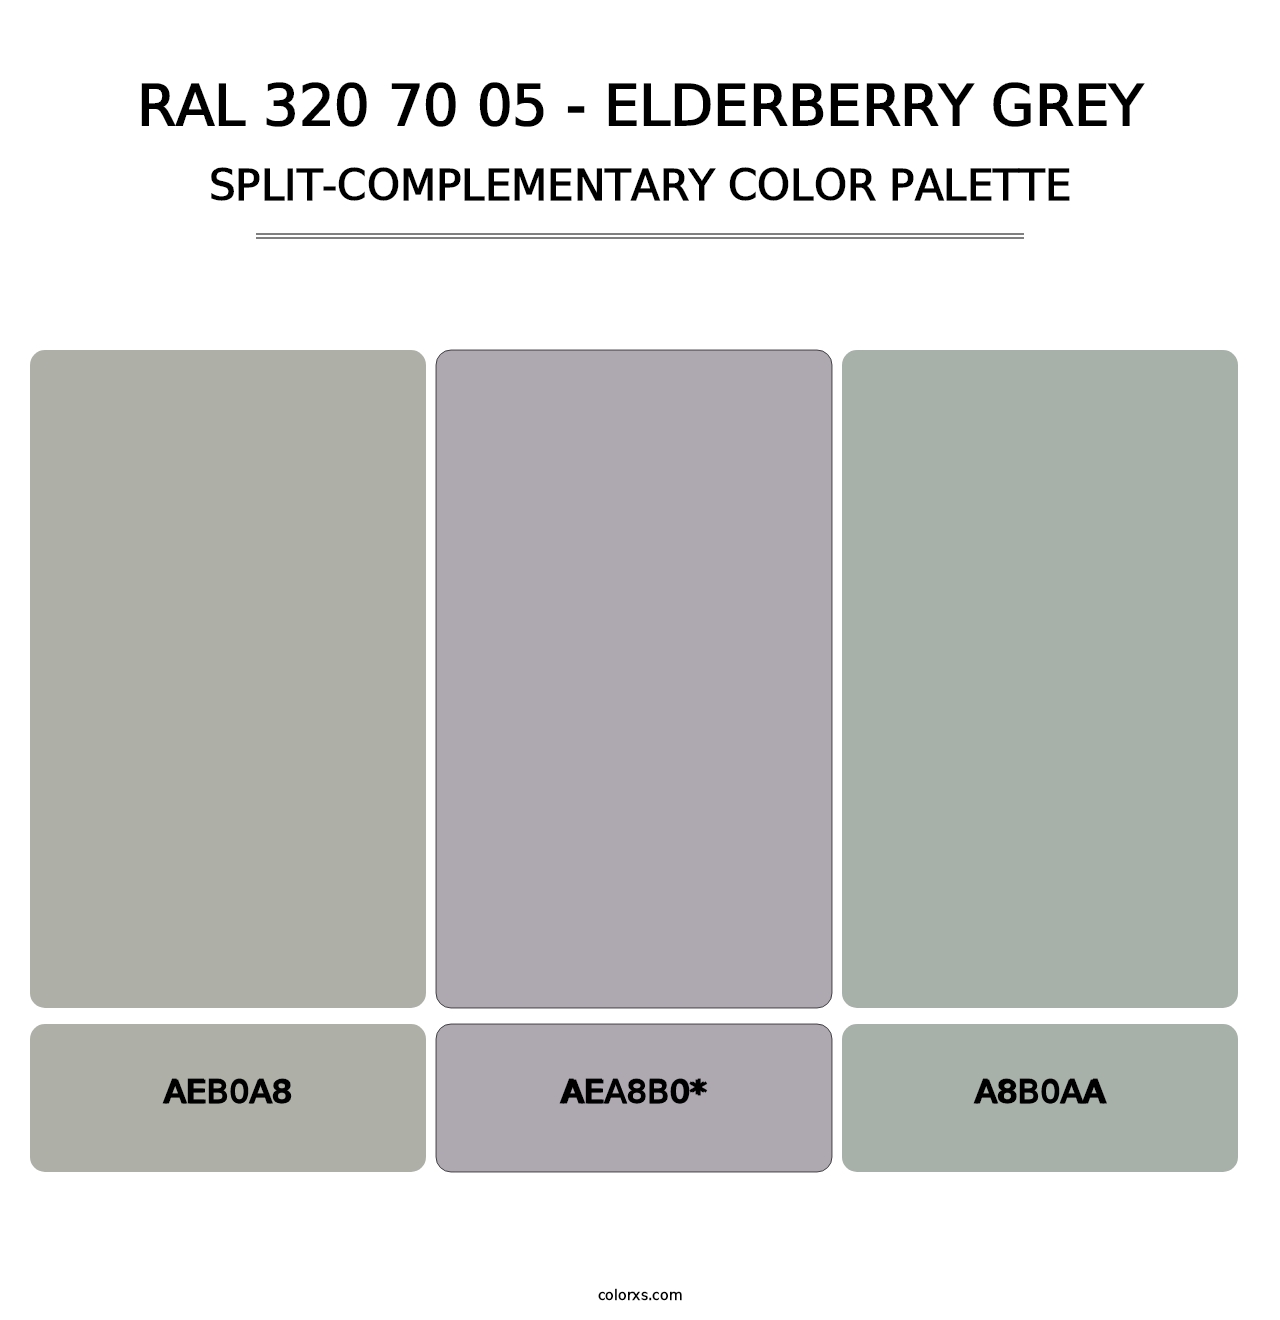 RAL 320 70 05 - Elderberry Grey - Split-Complementary Color Palette